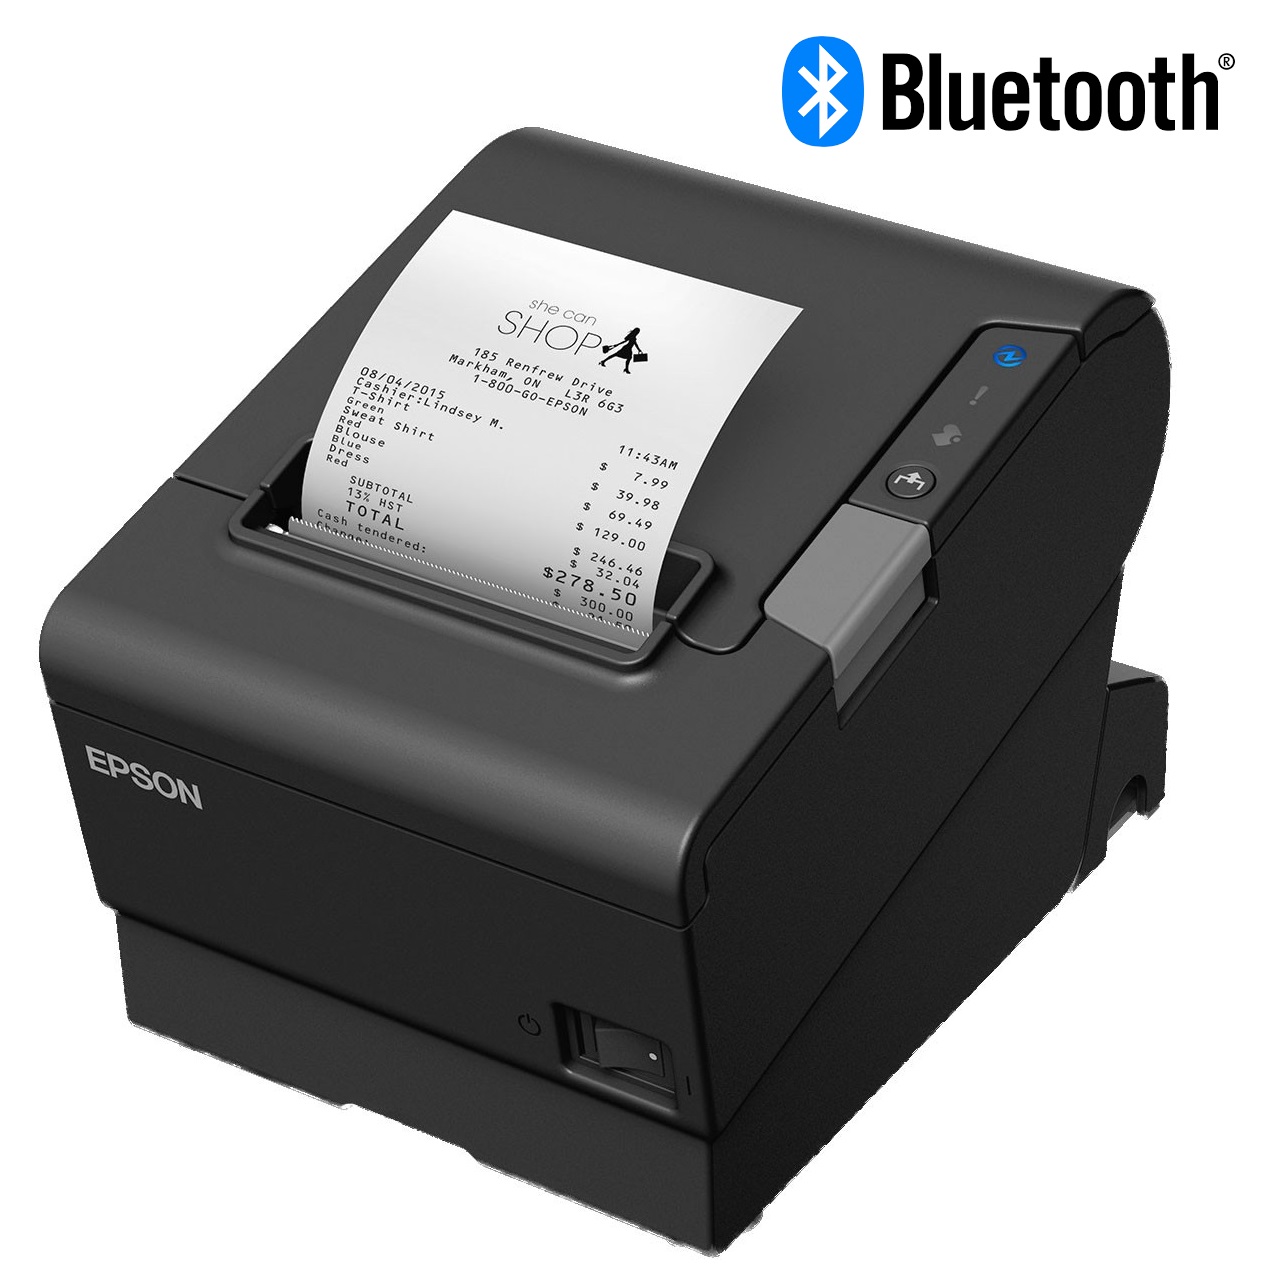 View Epson TM-T88VI Bluetooth Receipt Printer